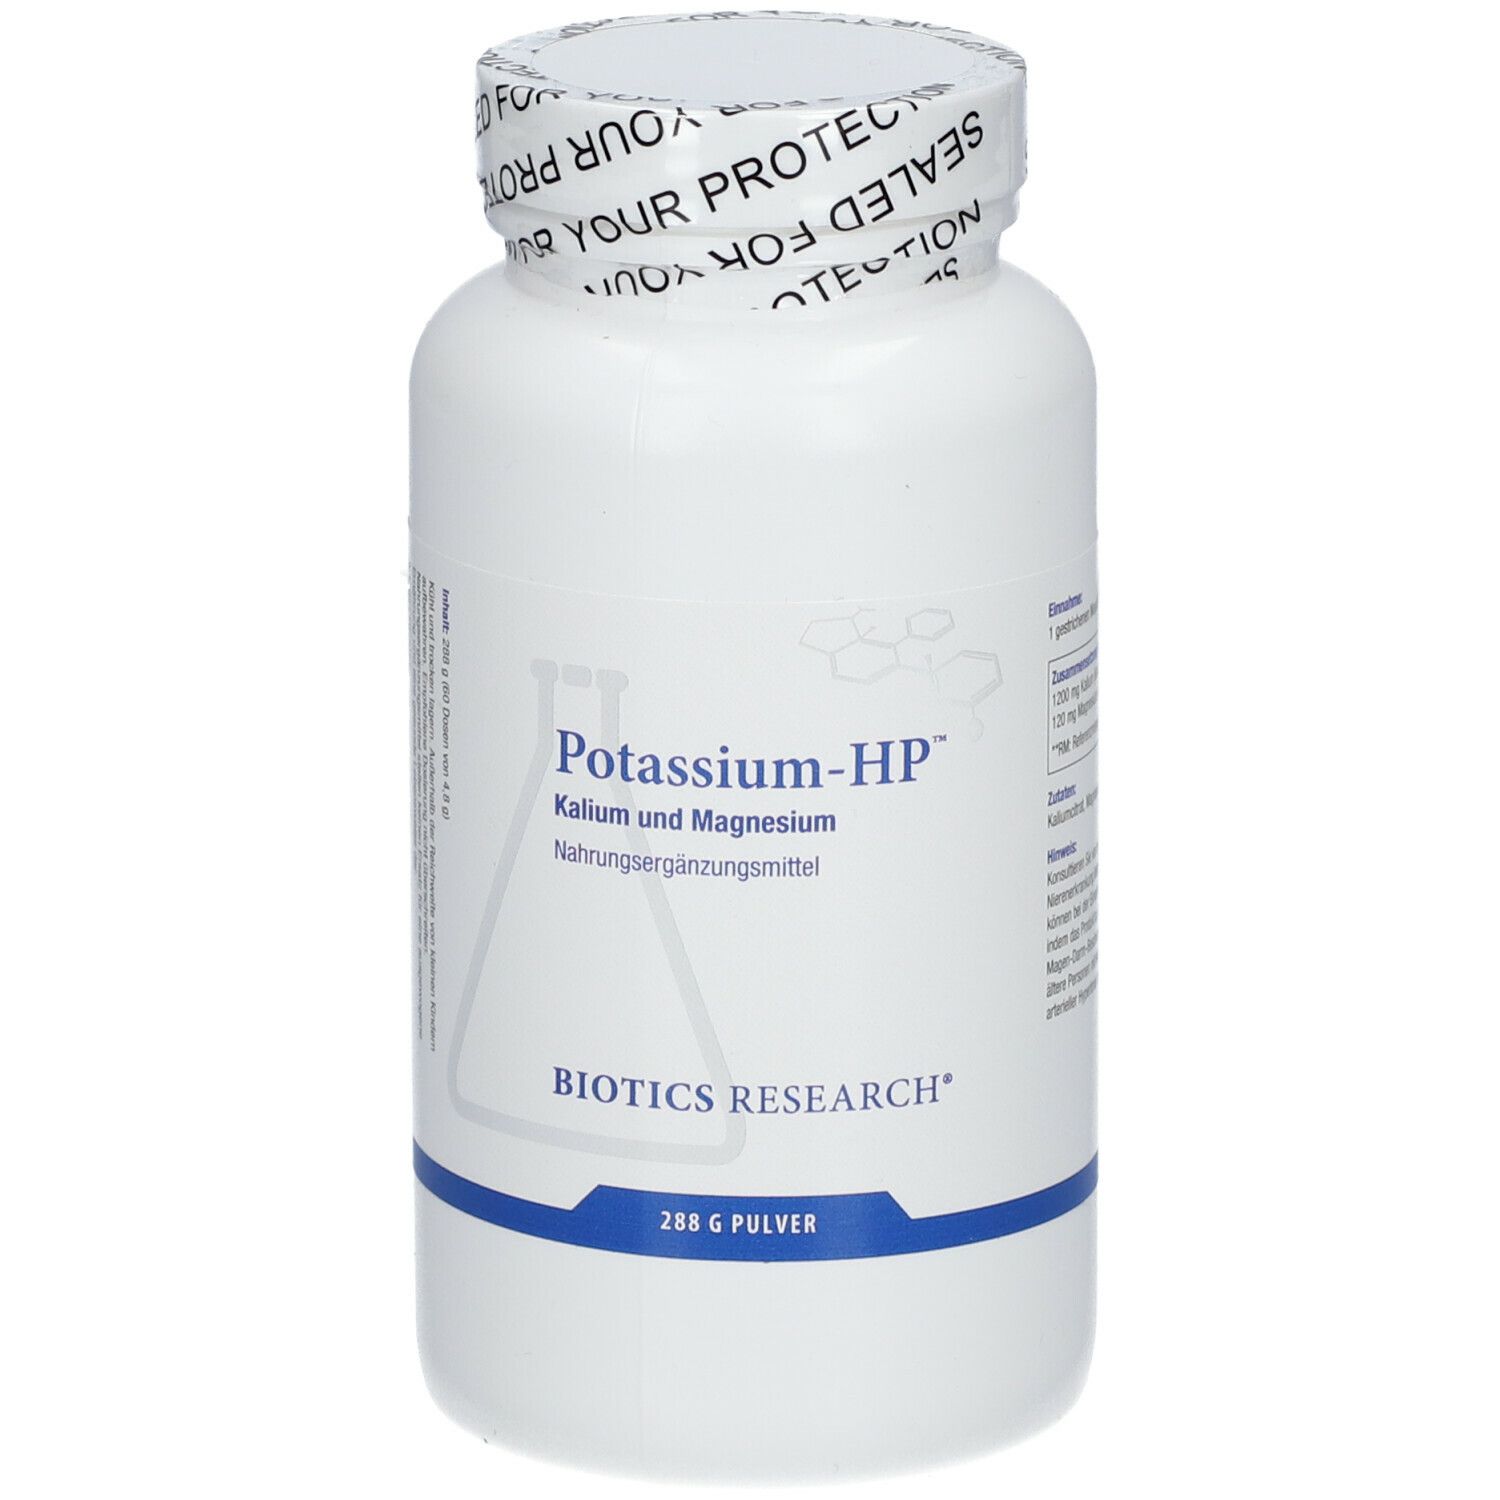 BIOTICS RESEARCH® Potassium-HP